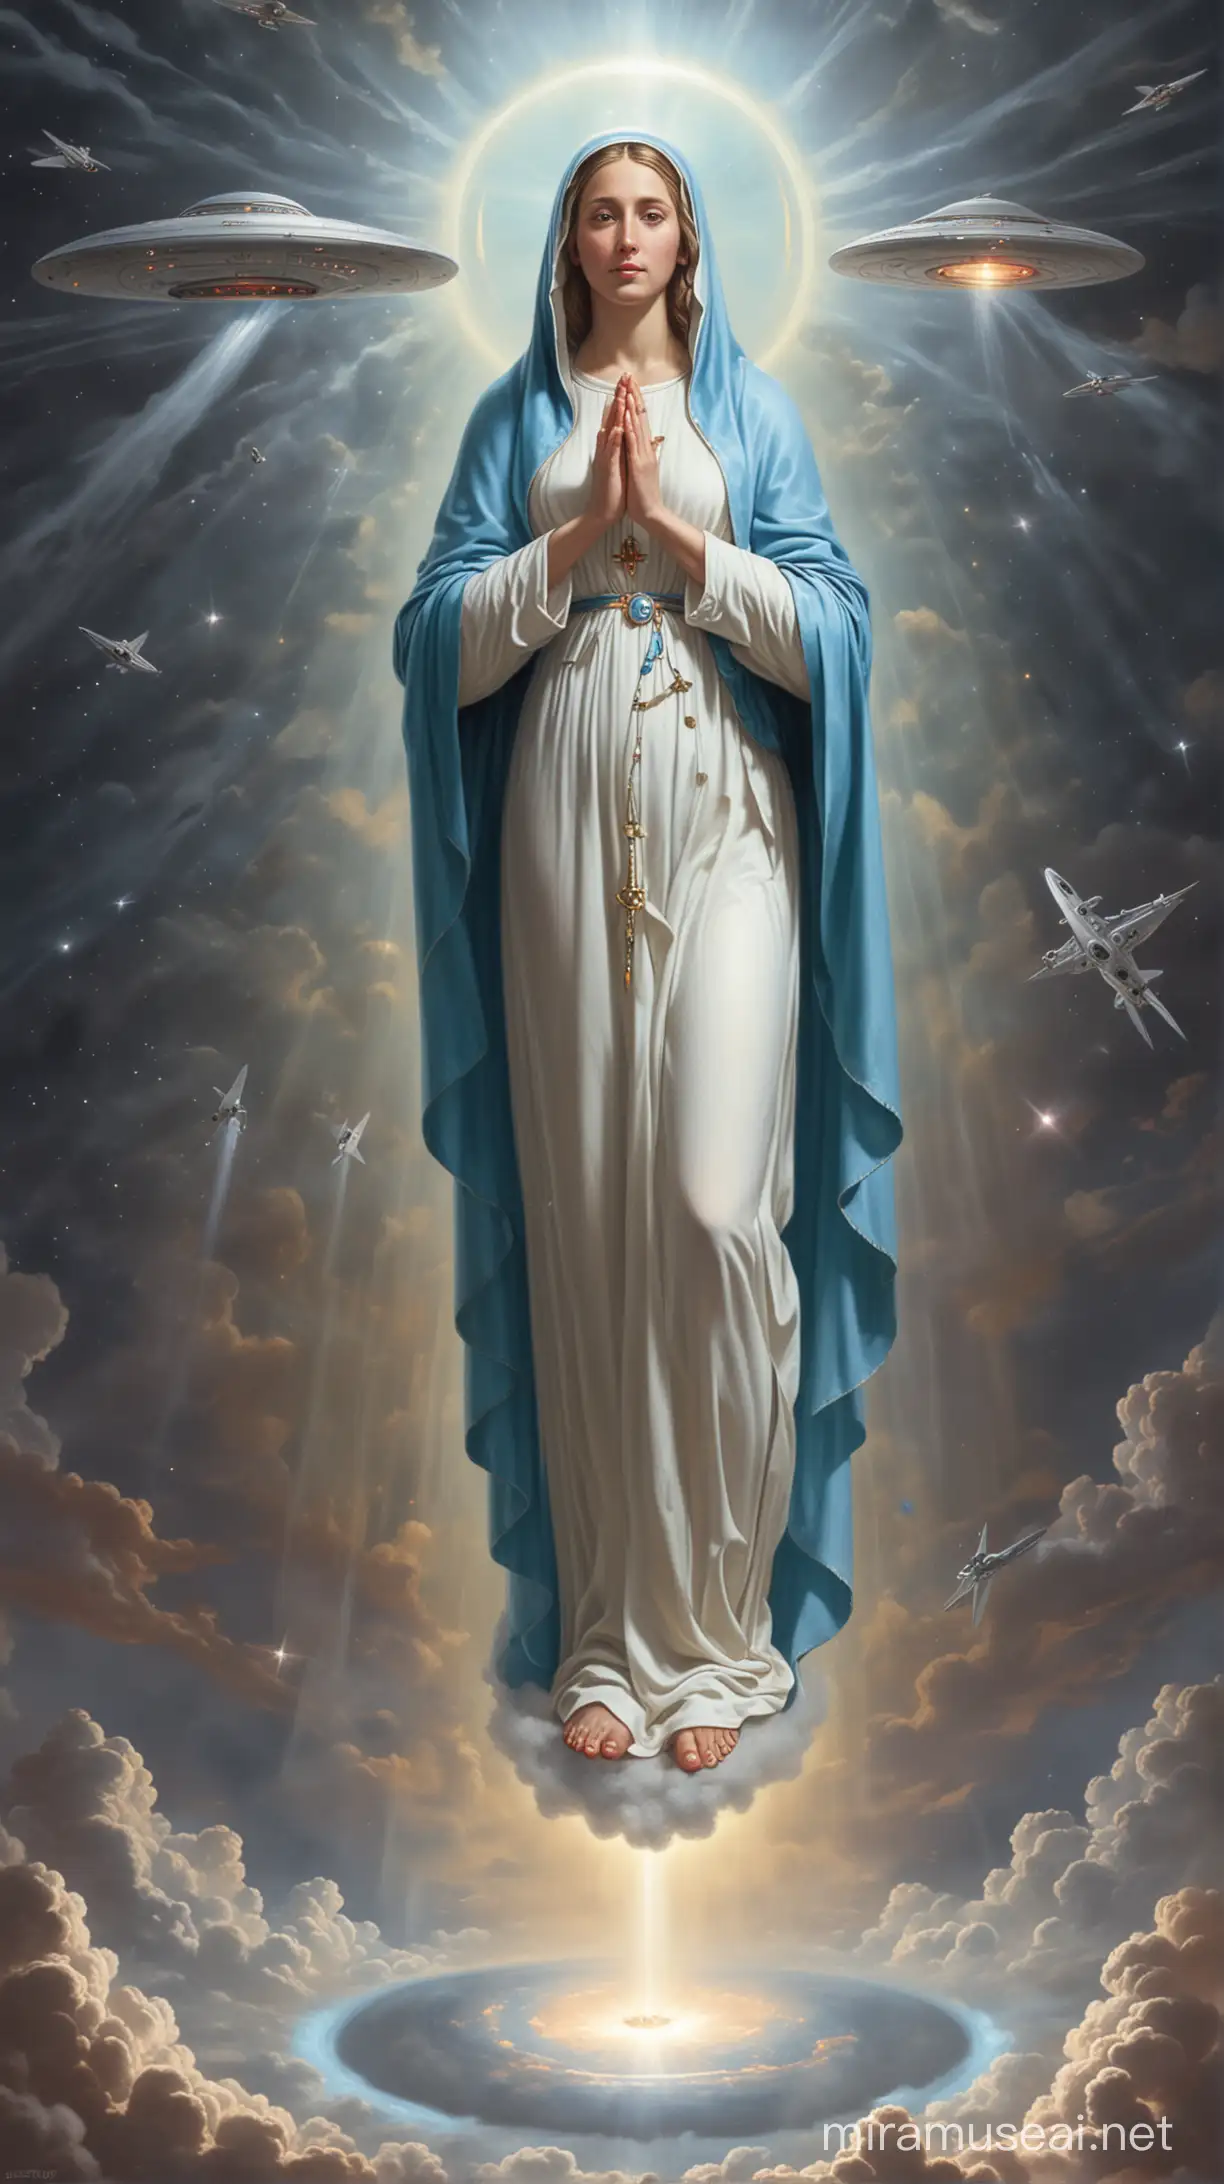 Virgin Mary Witnessing a UFO Phenomenon